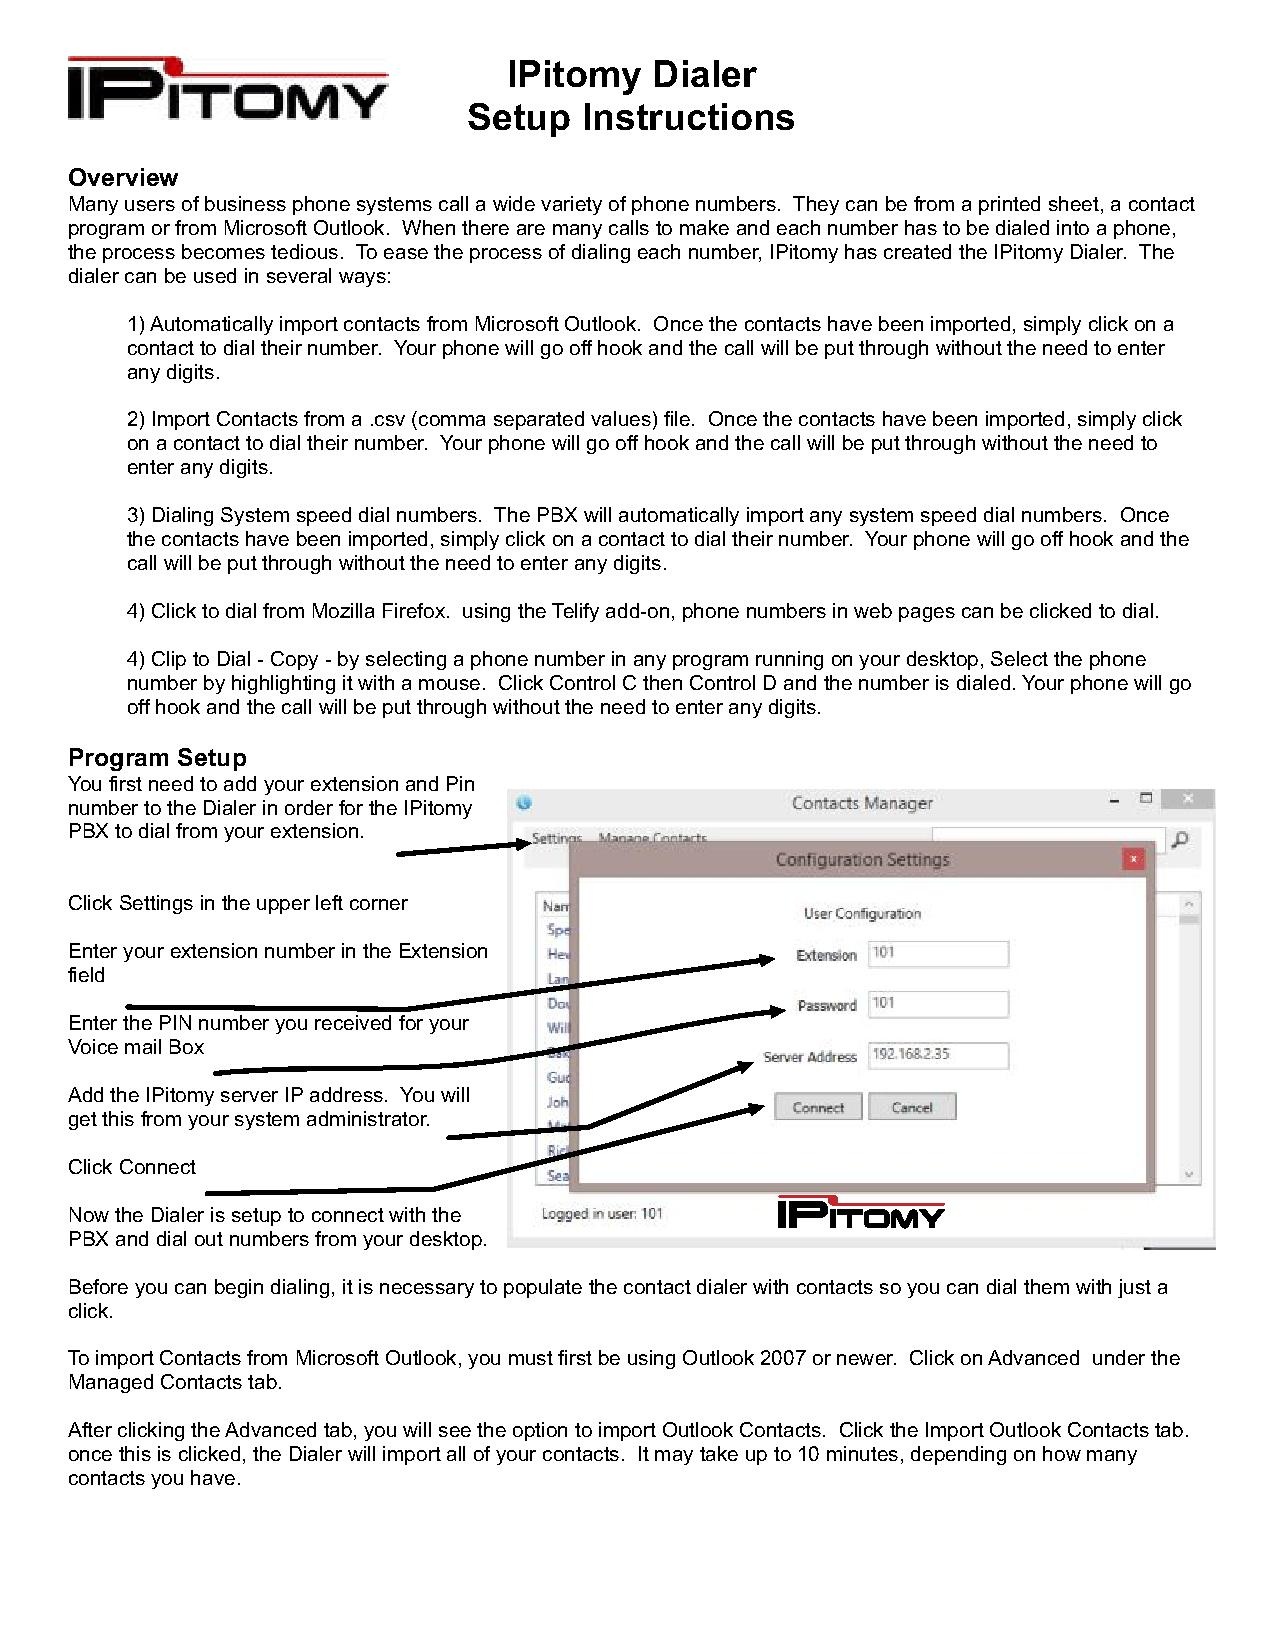 IPitomy Dialer App.pdf